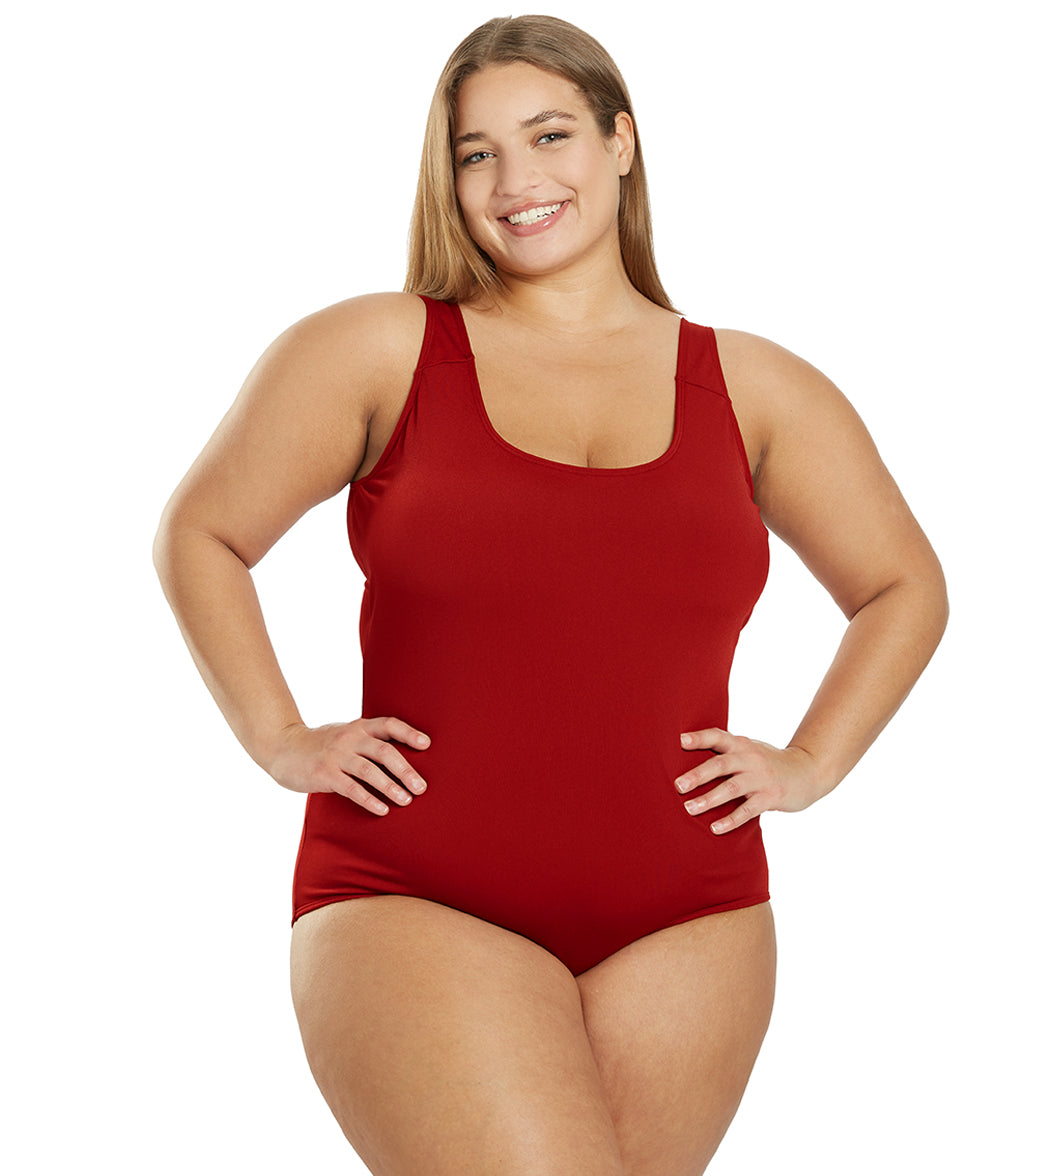 How to Choose Flattering Plus Size Swimwear - SwimOutlet.com